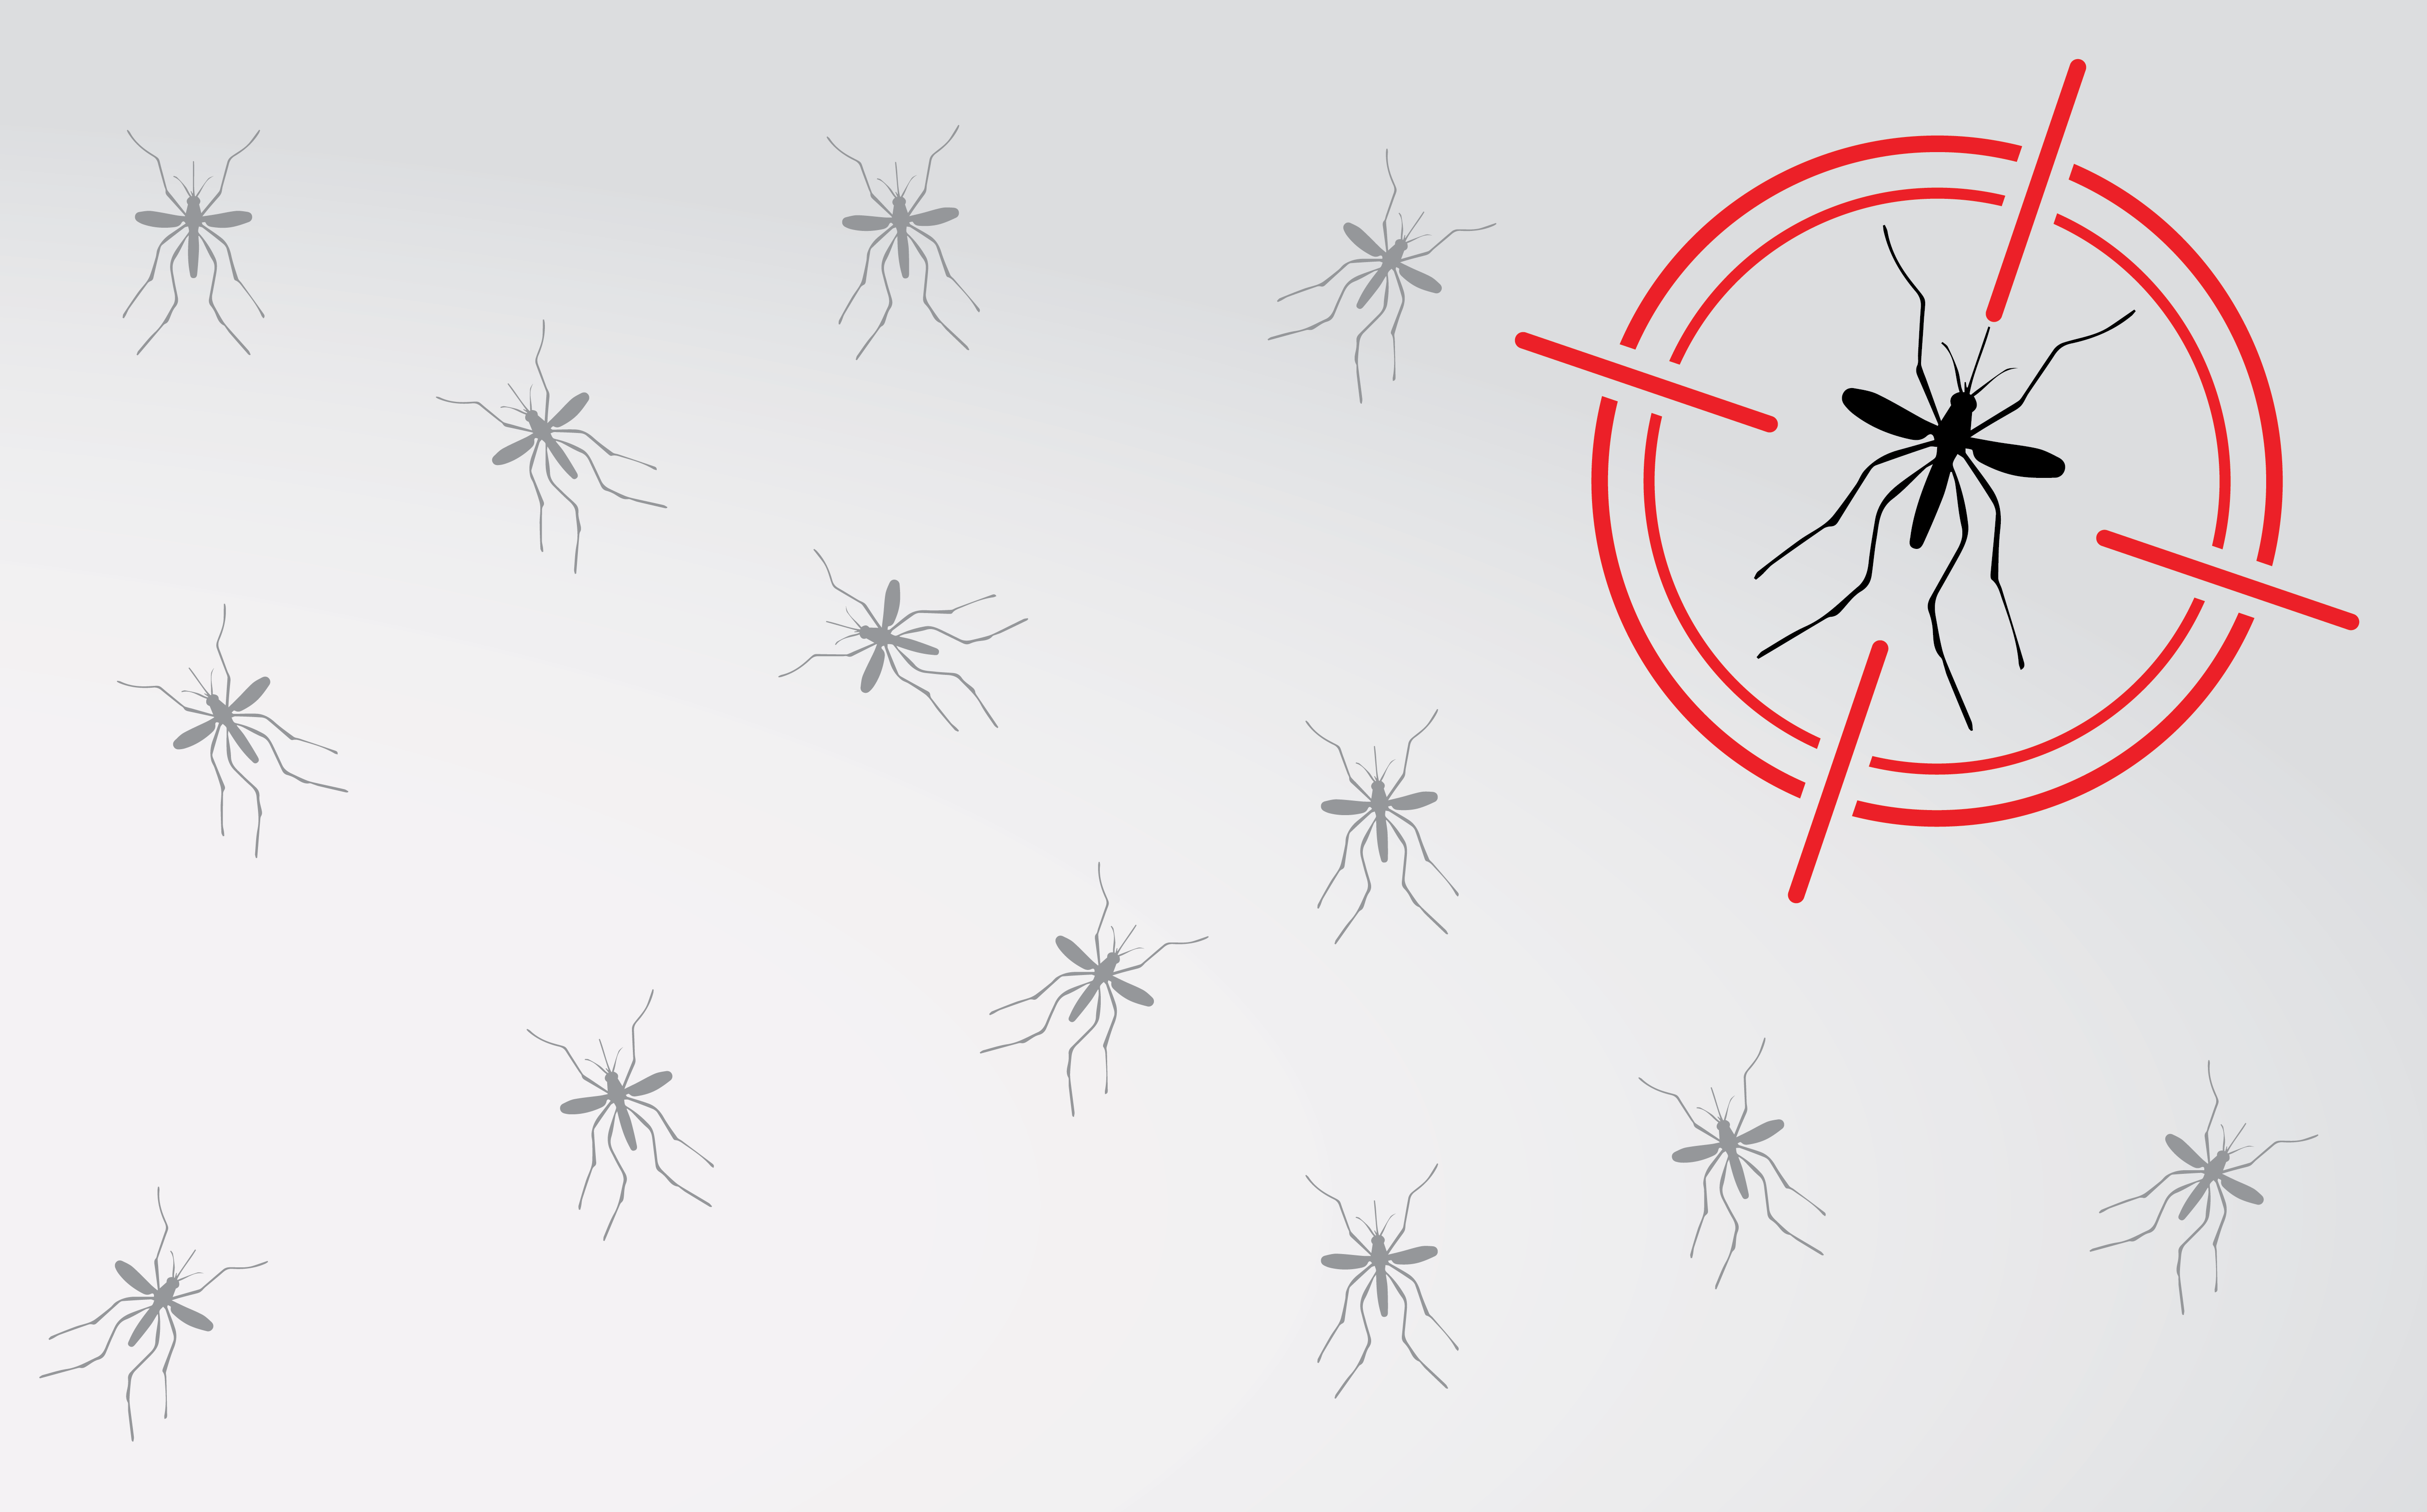 Como fazer a limpeza prevenindo o Aedes Aegypti